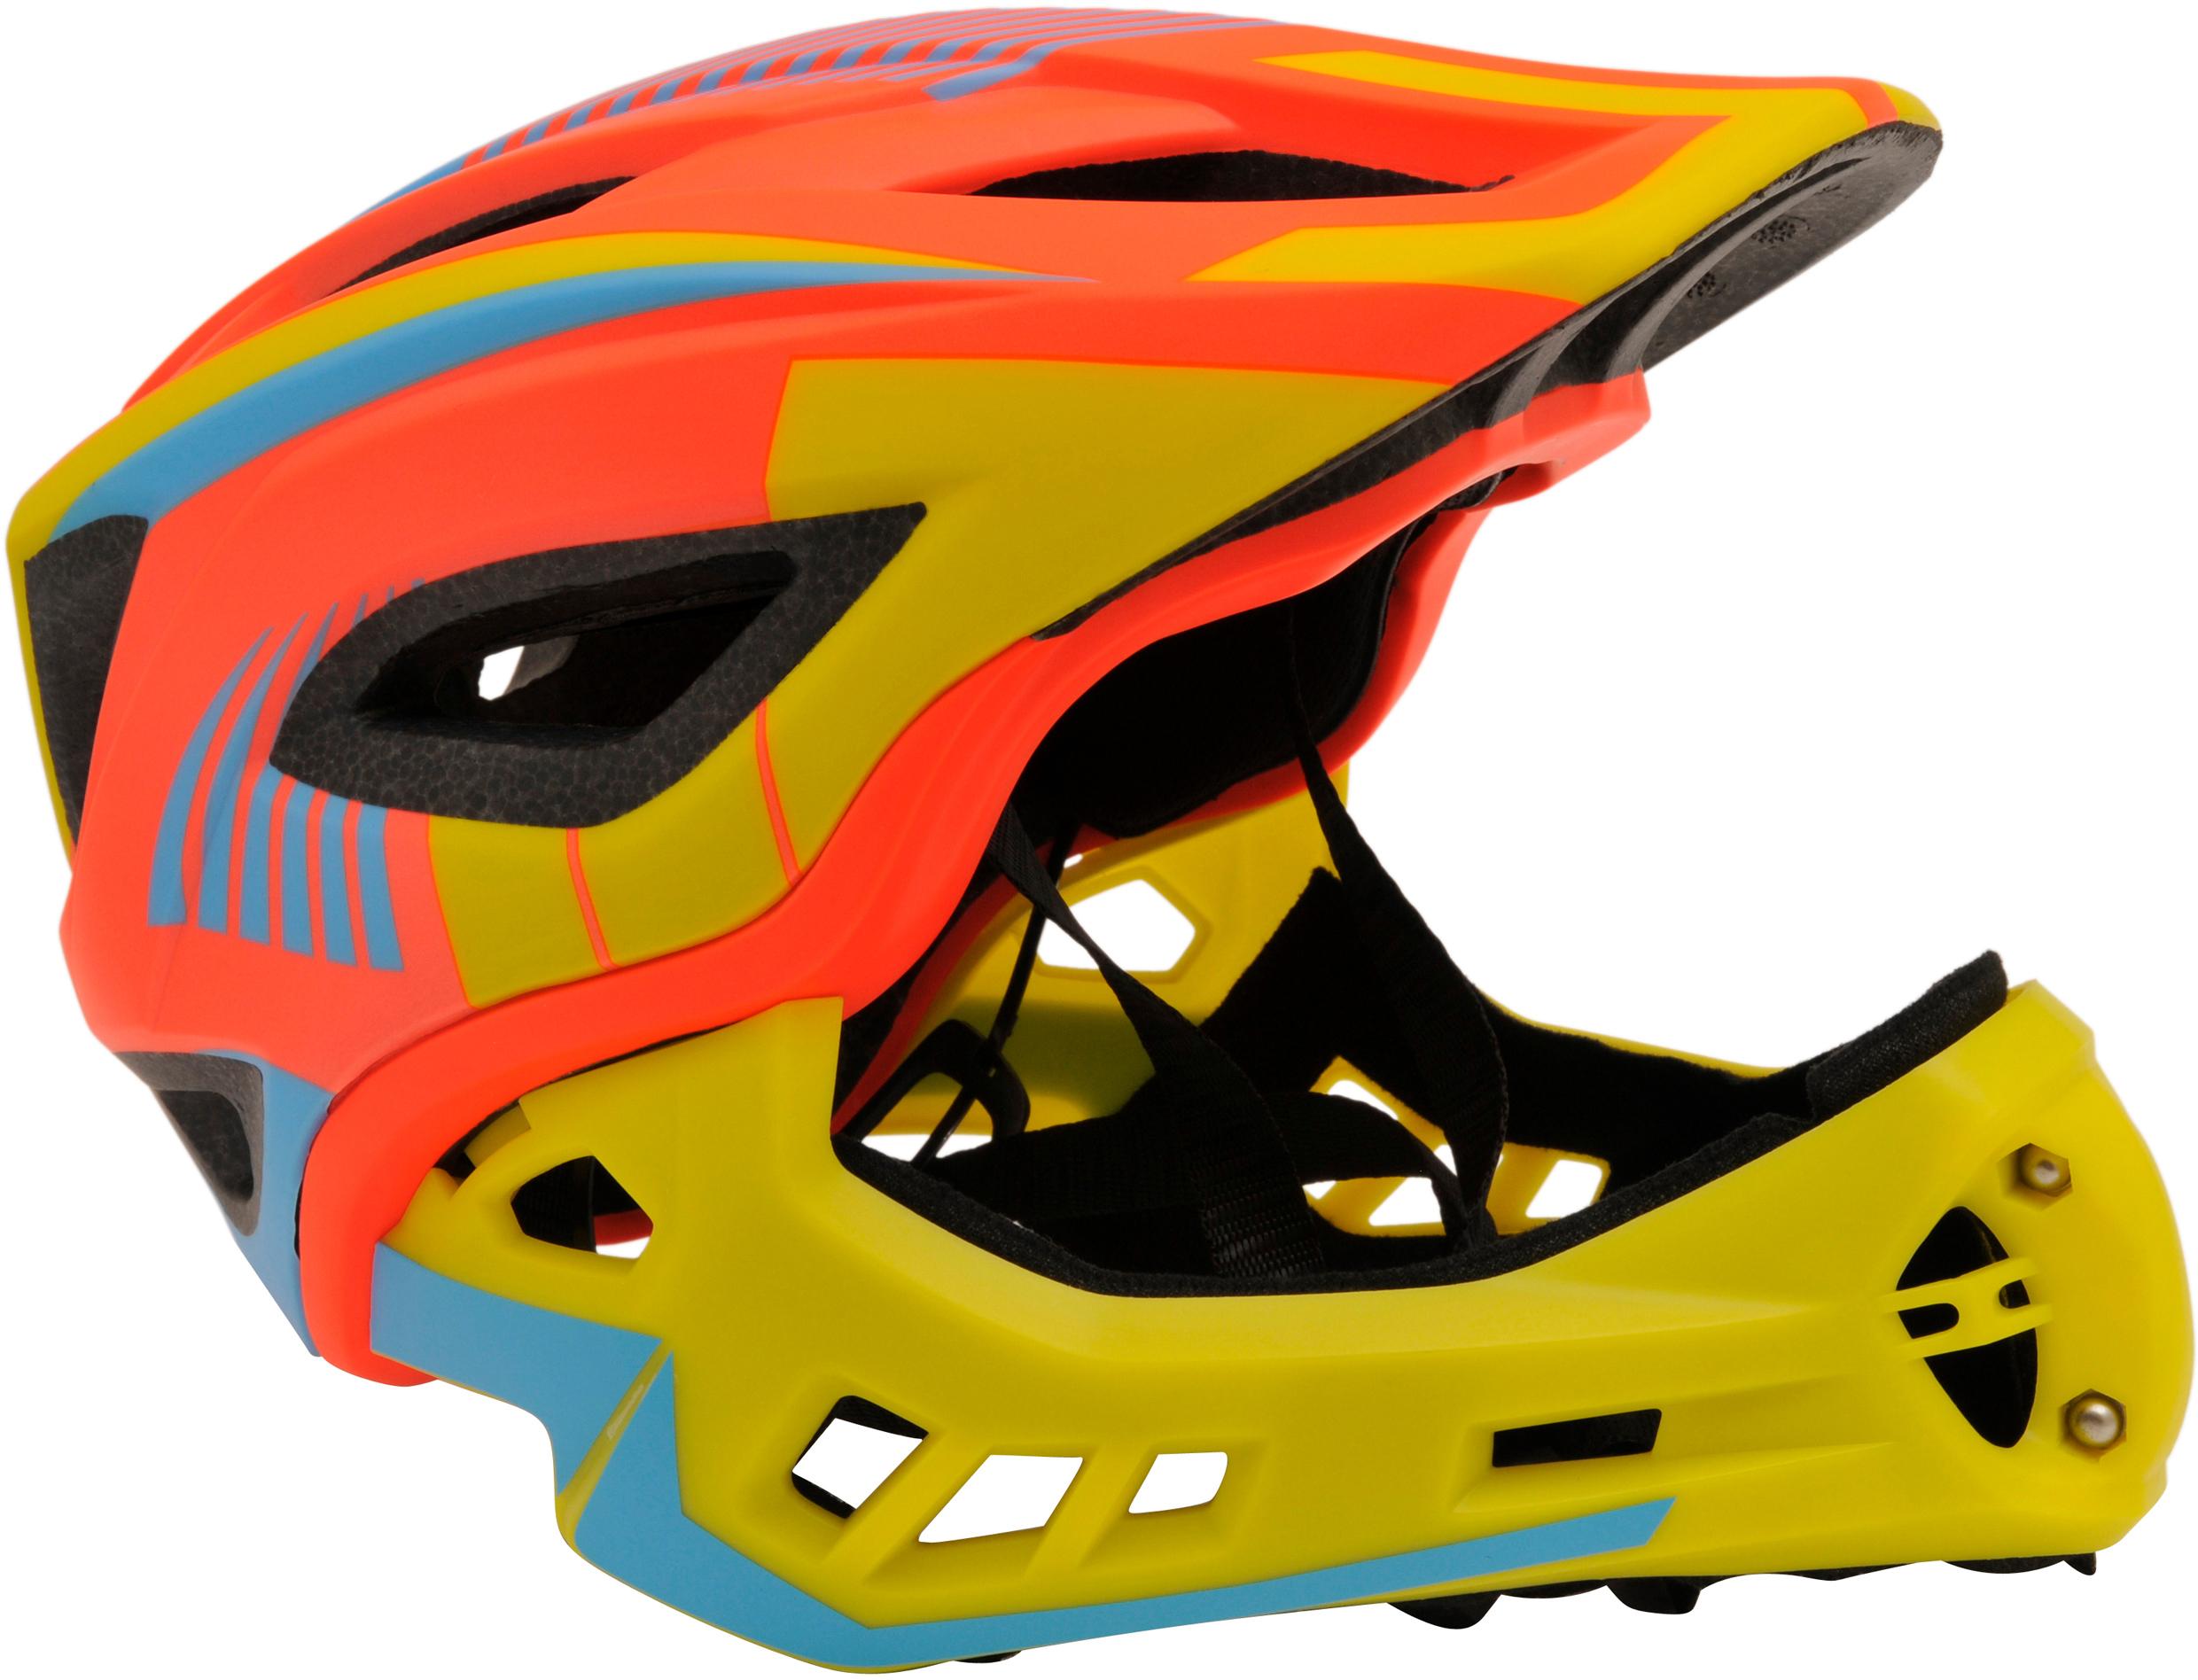 Kiddimoto Ikon Kids Helmet - Orange/Yellow (Medium)